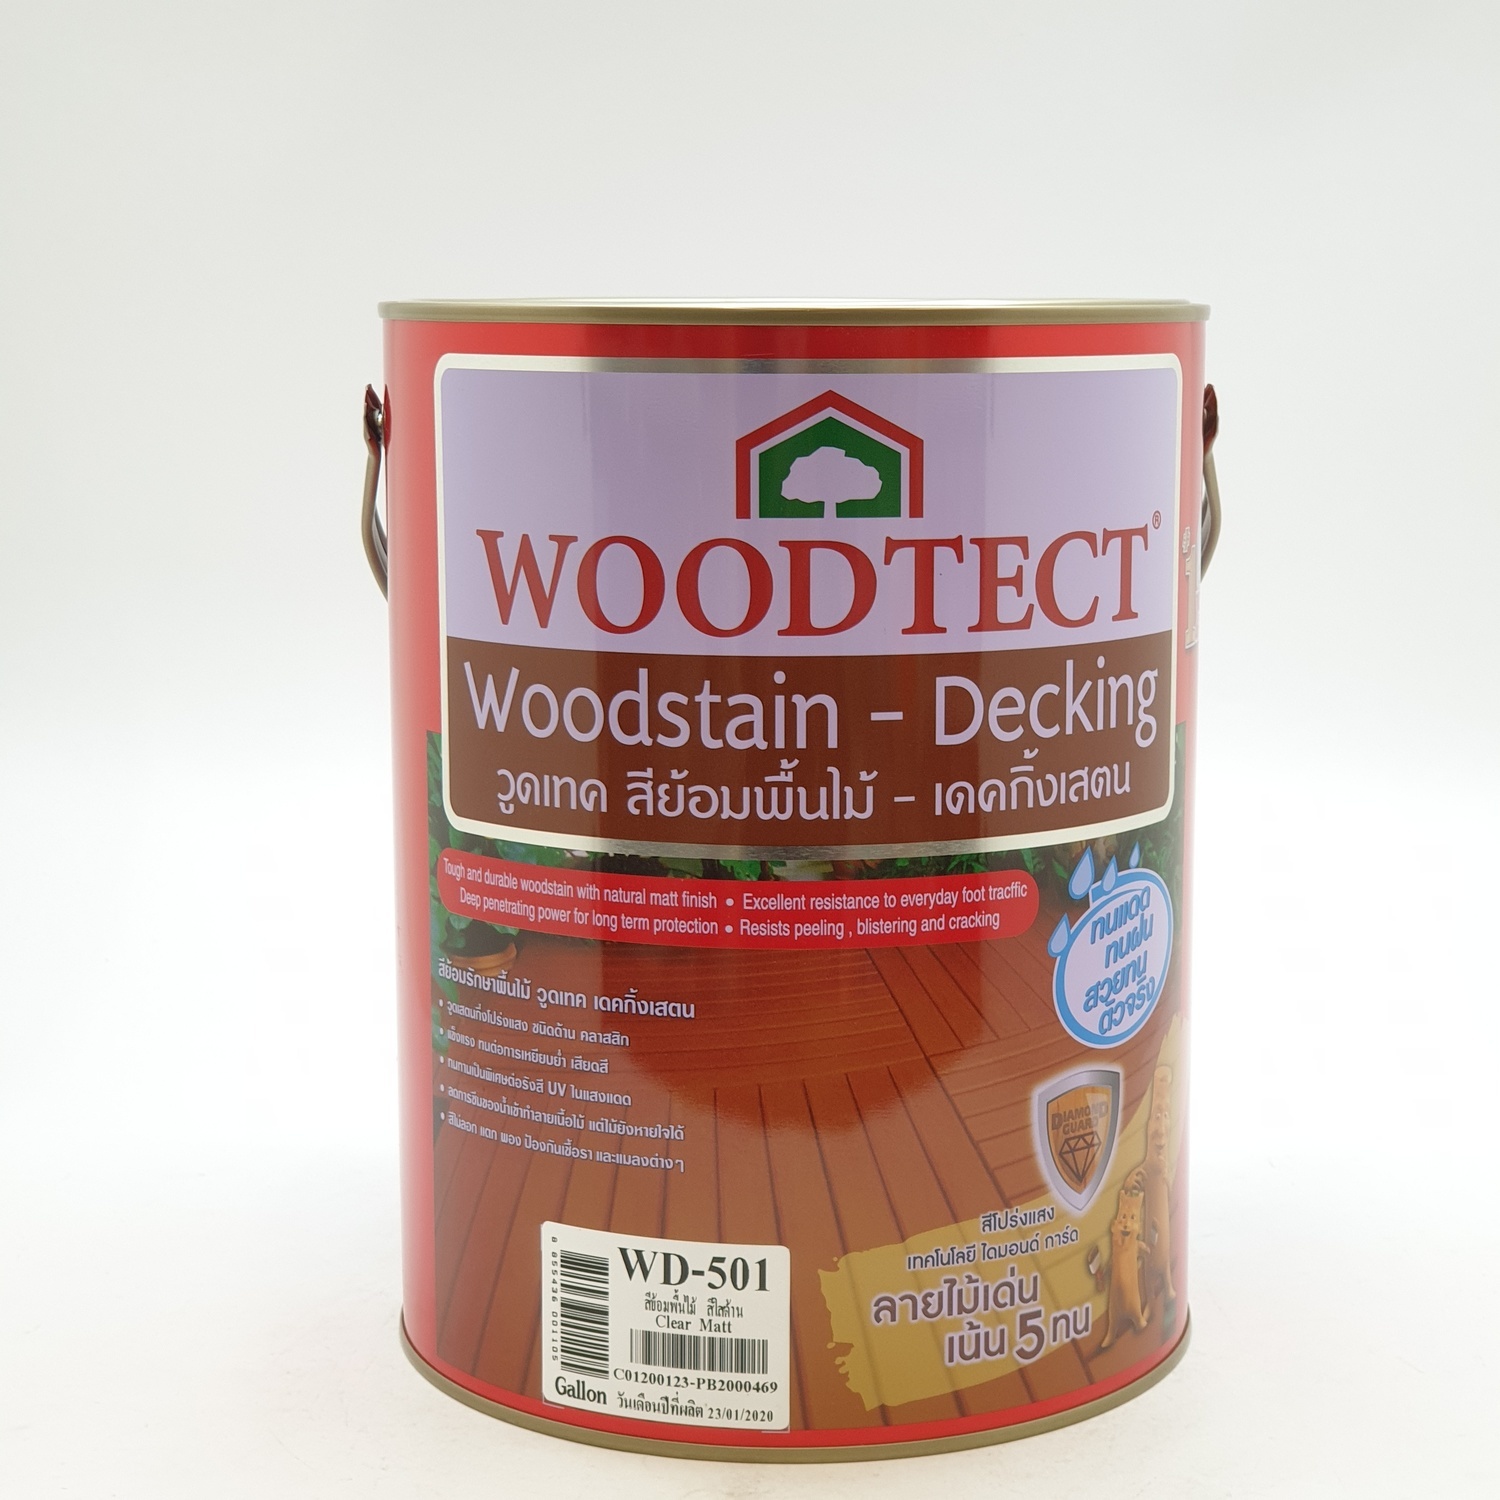 Woodtect วูดเทคเดคกิ้งเสตน WD-501 1 กล. สีใสด้าน